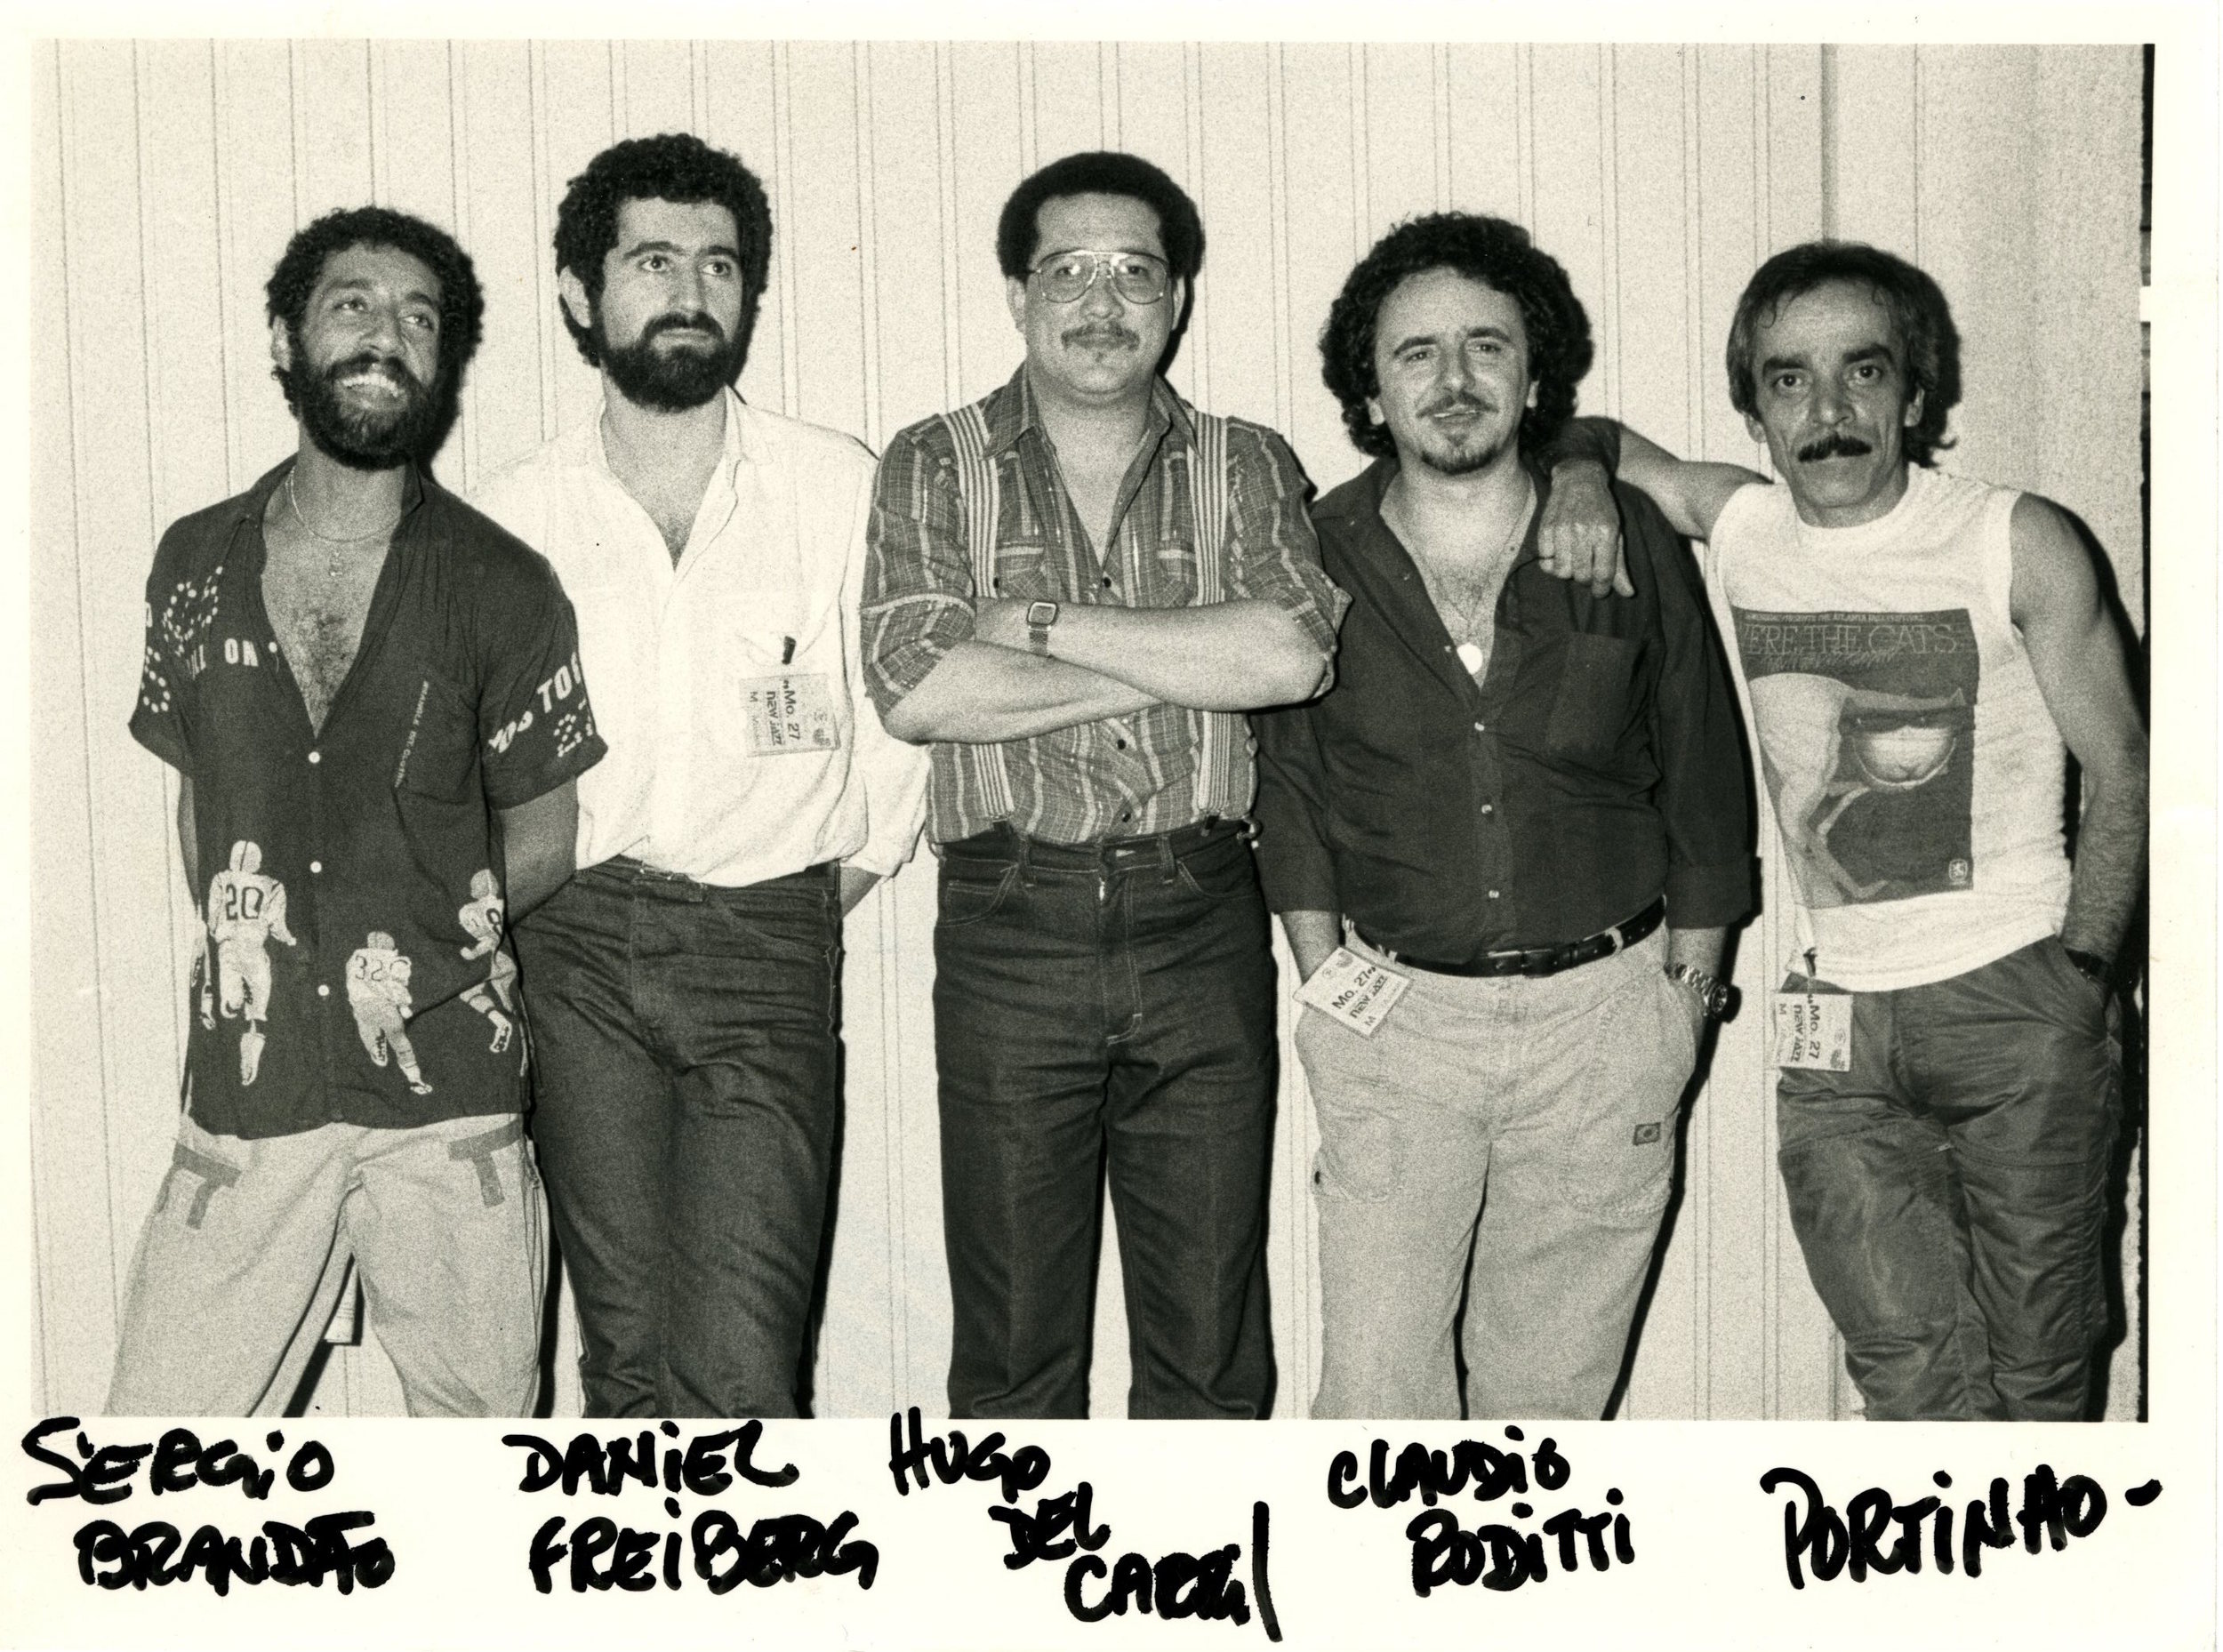 With Sergio Brandão, Daniel Frieberg, Hugo del Carral, Claudio Roditti, and Portinho